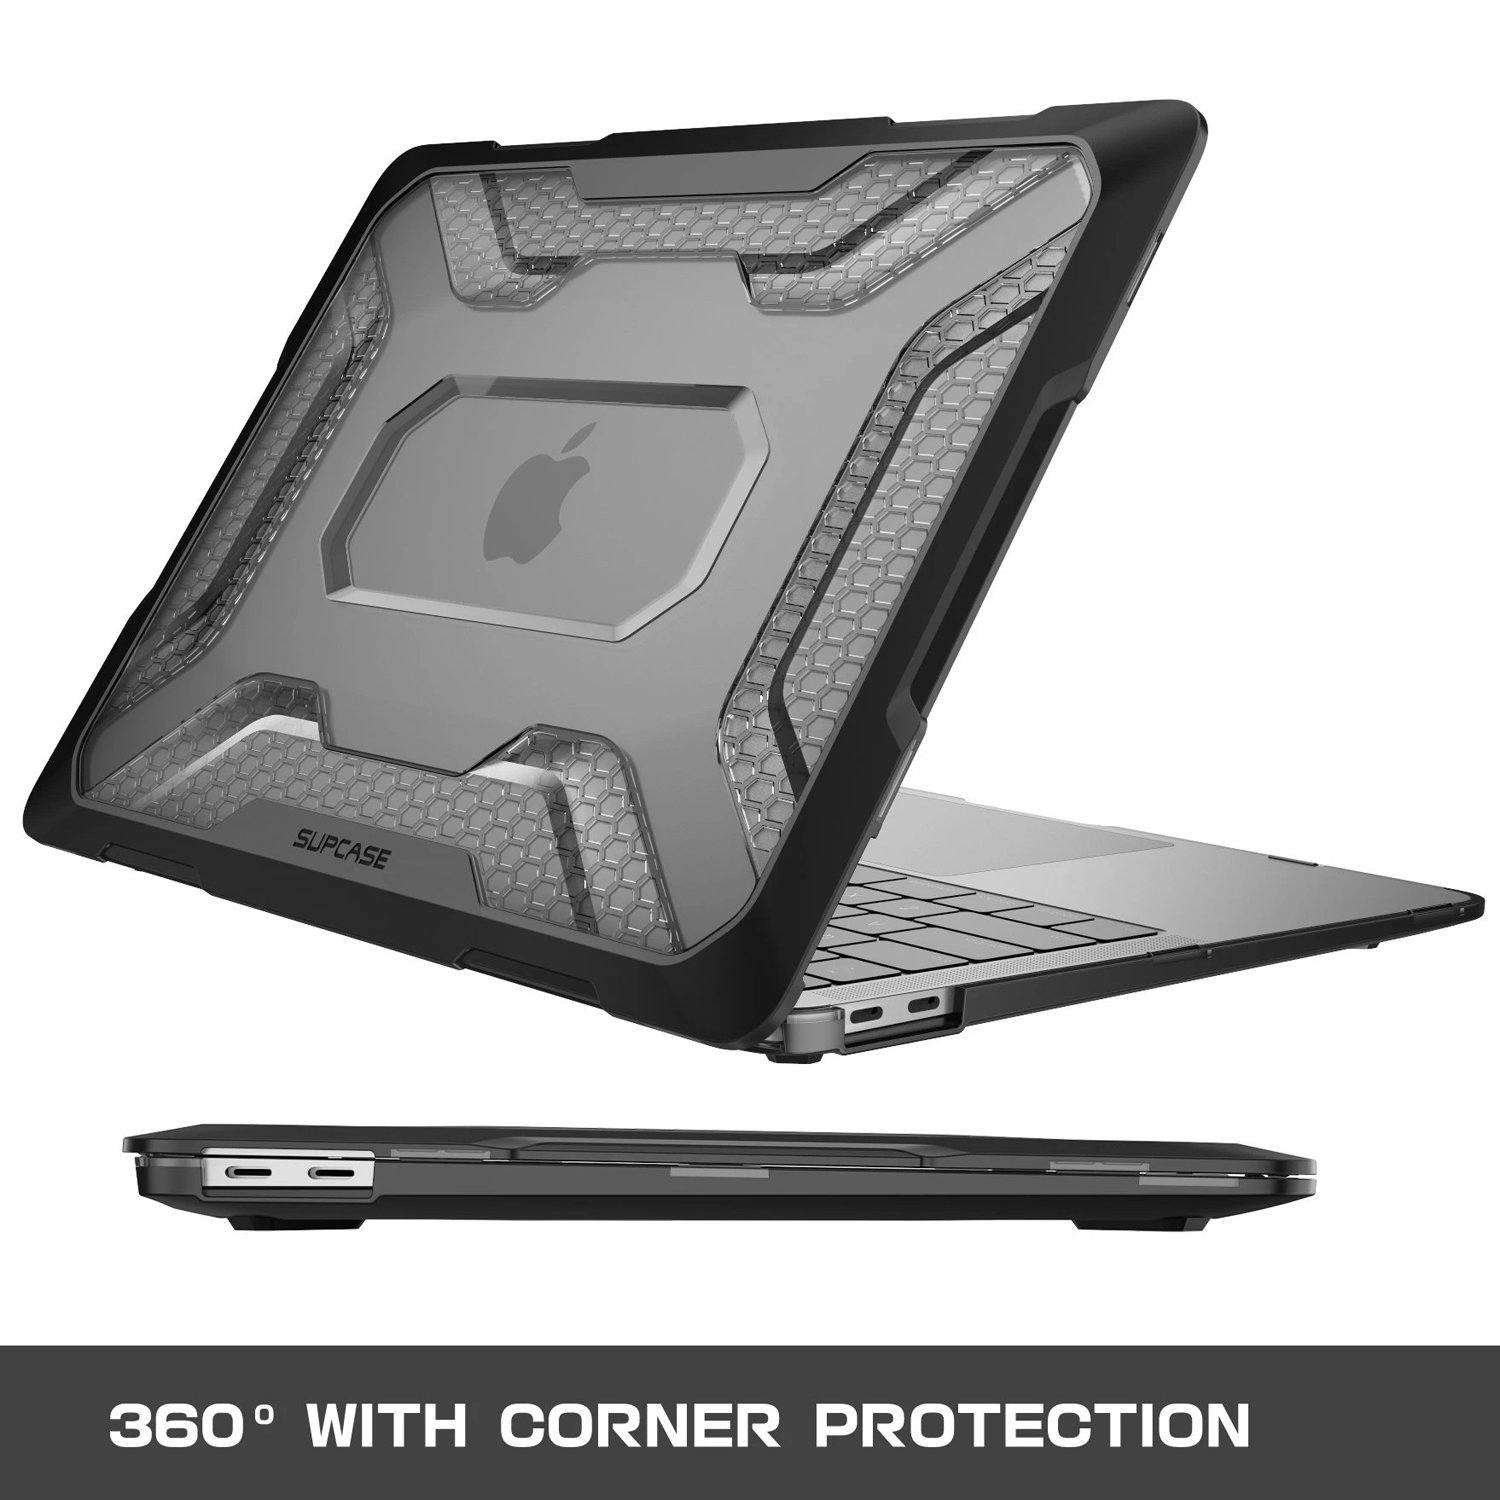 Supcase UB Series Hybrid Protective Case for Macbook Pro 13"(2020), Frost/Black Default Supcase 